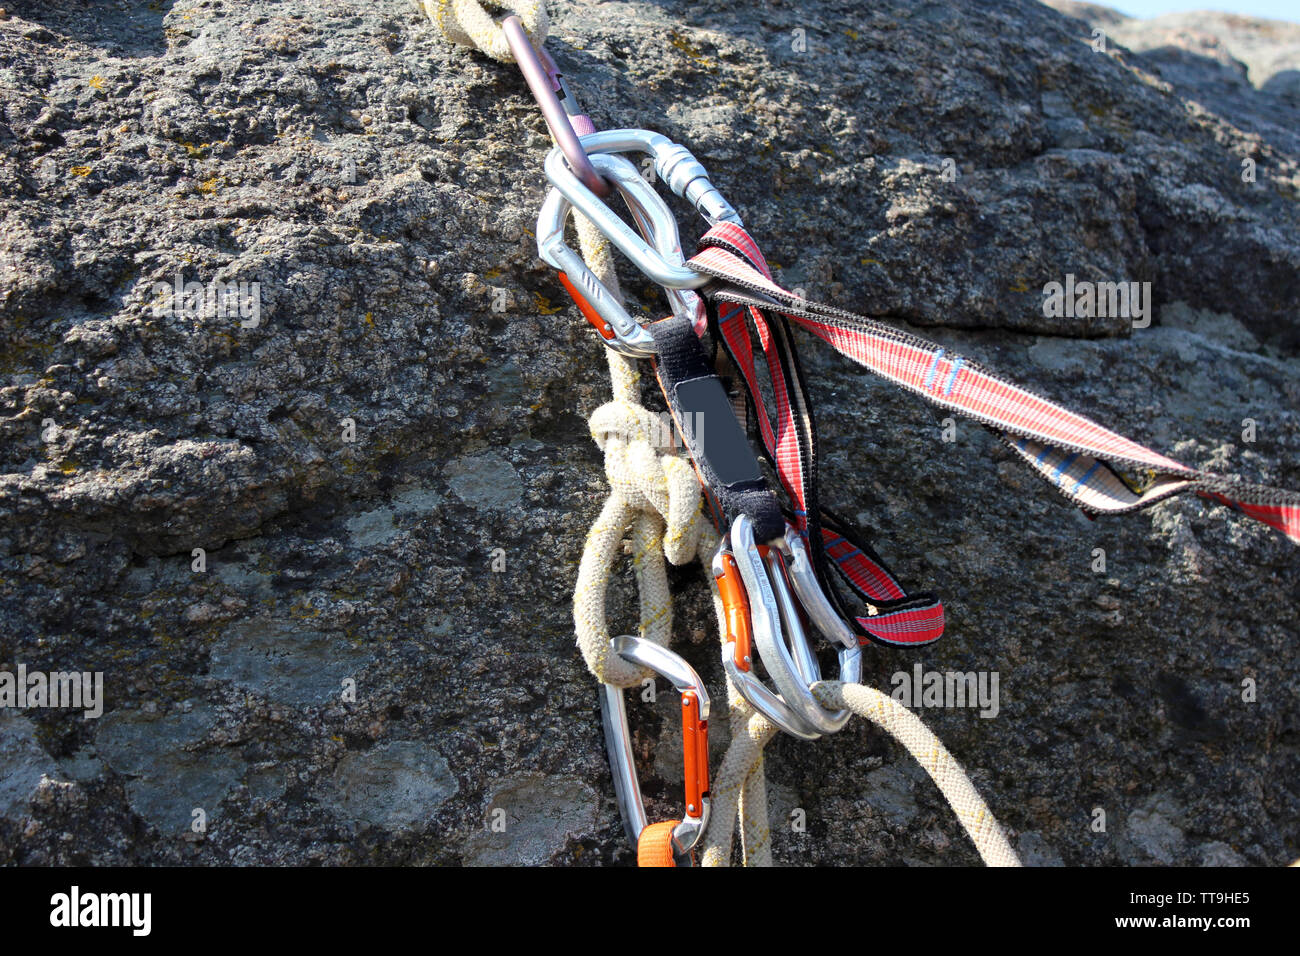 https://c8.alamy.com/comp/TT9HE5/rock-climbing-rope-with-hooks-on-rock-close-up-TT9HE5.jpg